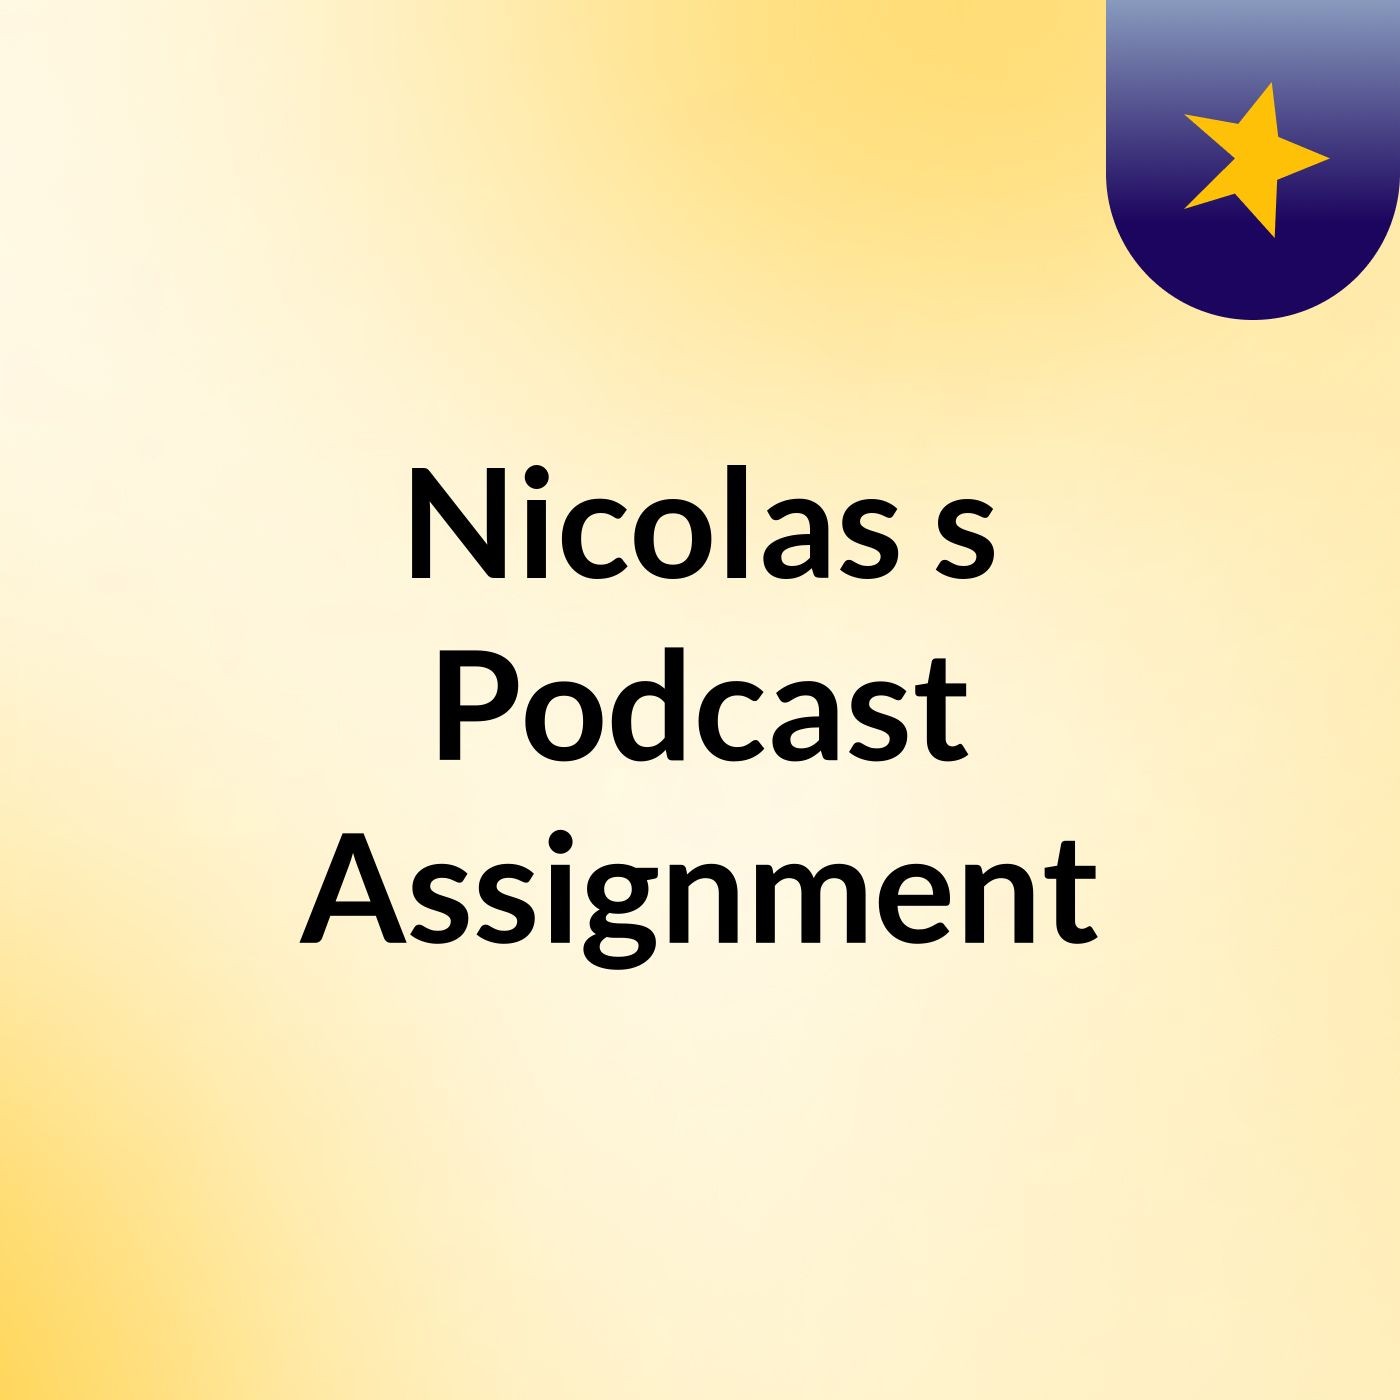 Nicolas's Podcast Assignment